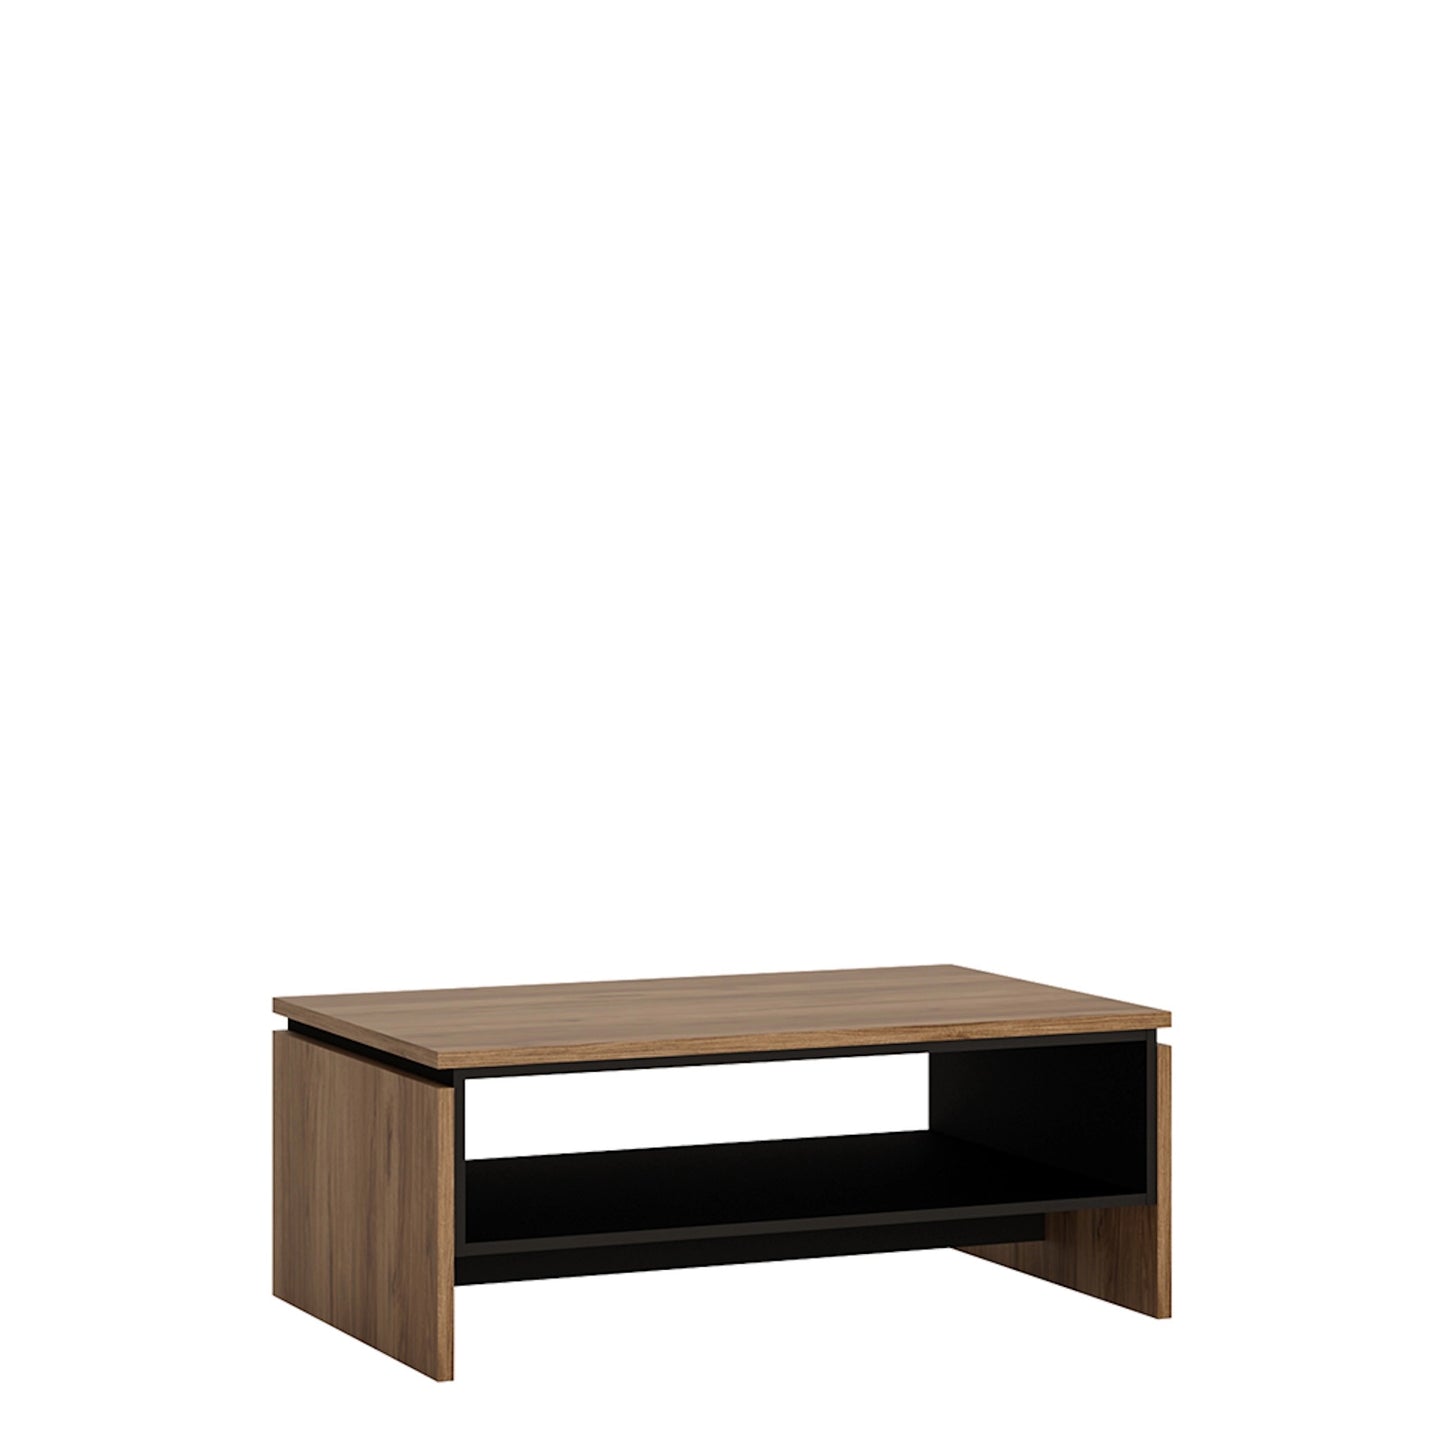 Furniture To Go Brolo Coffee Table Black & Dark Wood